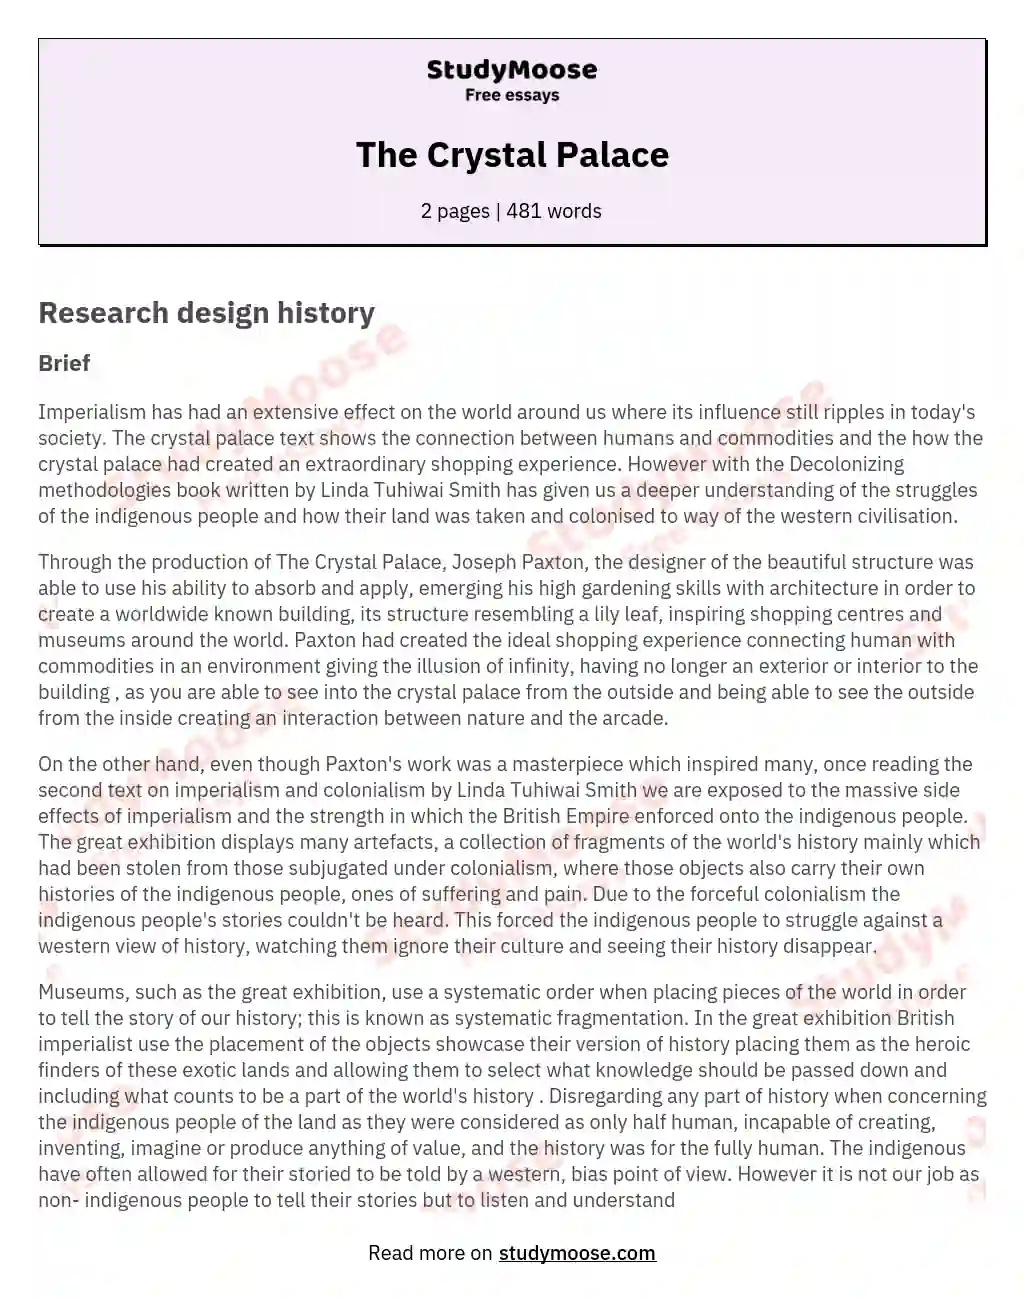 The Crystal Palace essay